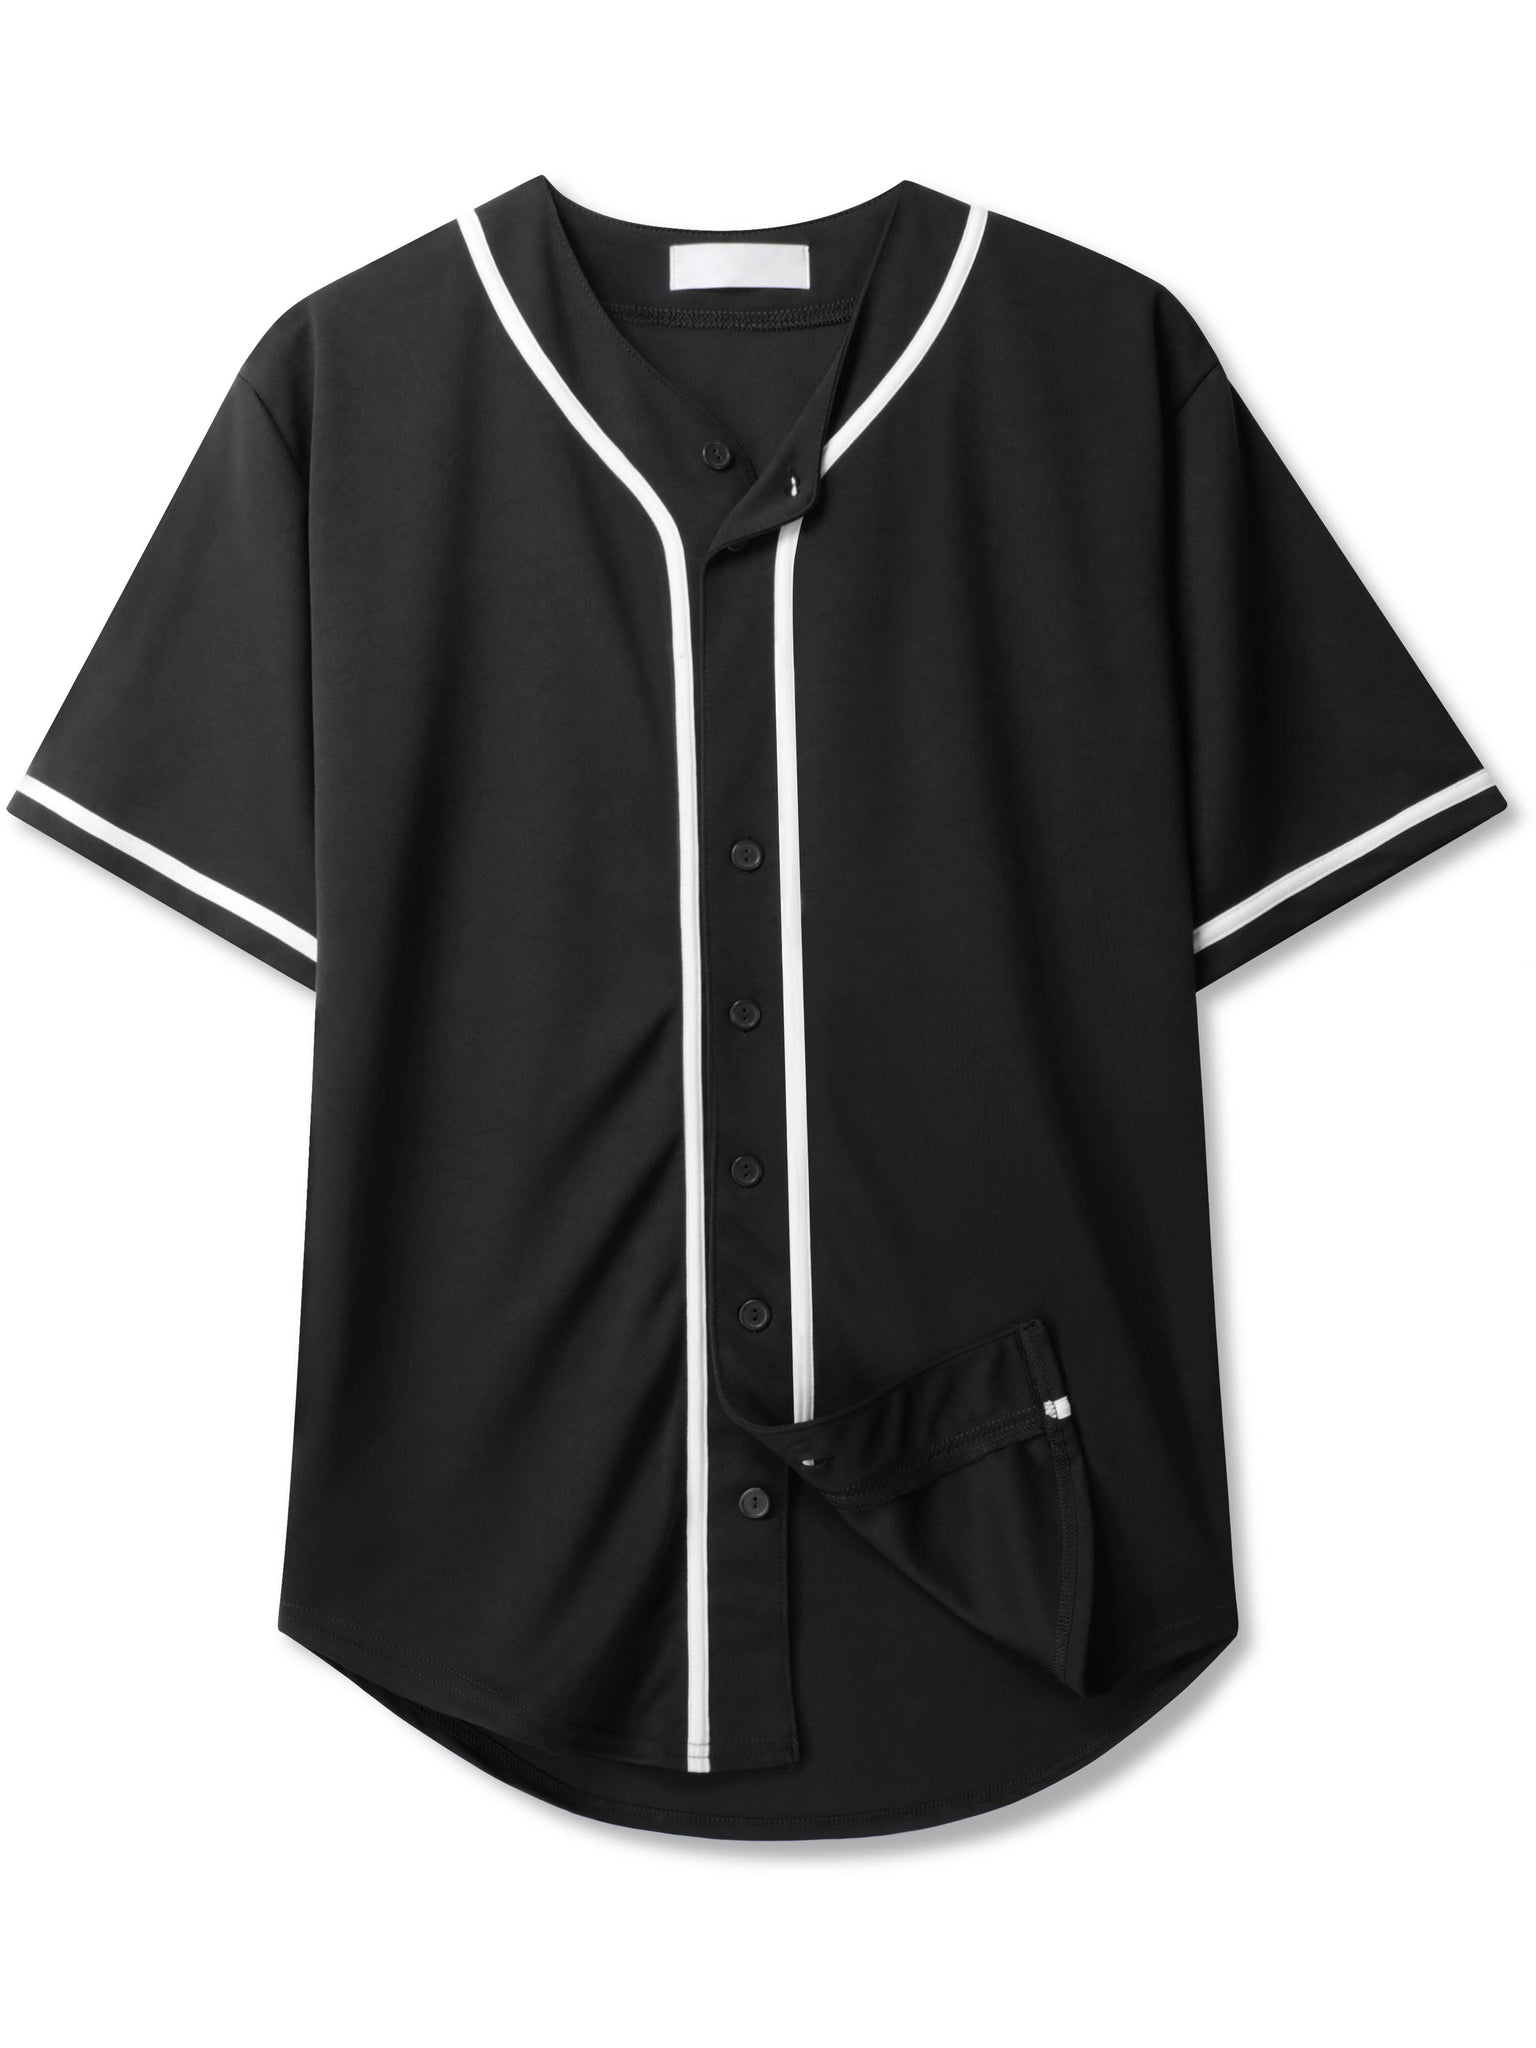  Black White Buffalo Plaid Baseball Jersey Men Casual Short  Sleeves Baseball Shirt Outfits for Office Outside : Clothing, Shoes &  Jewelry